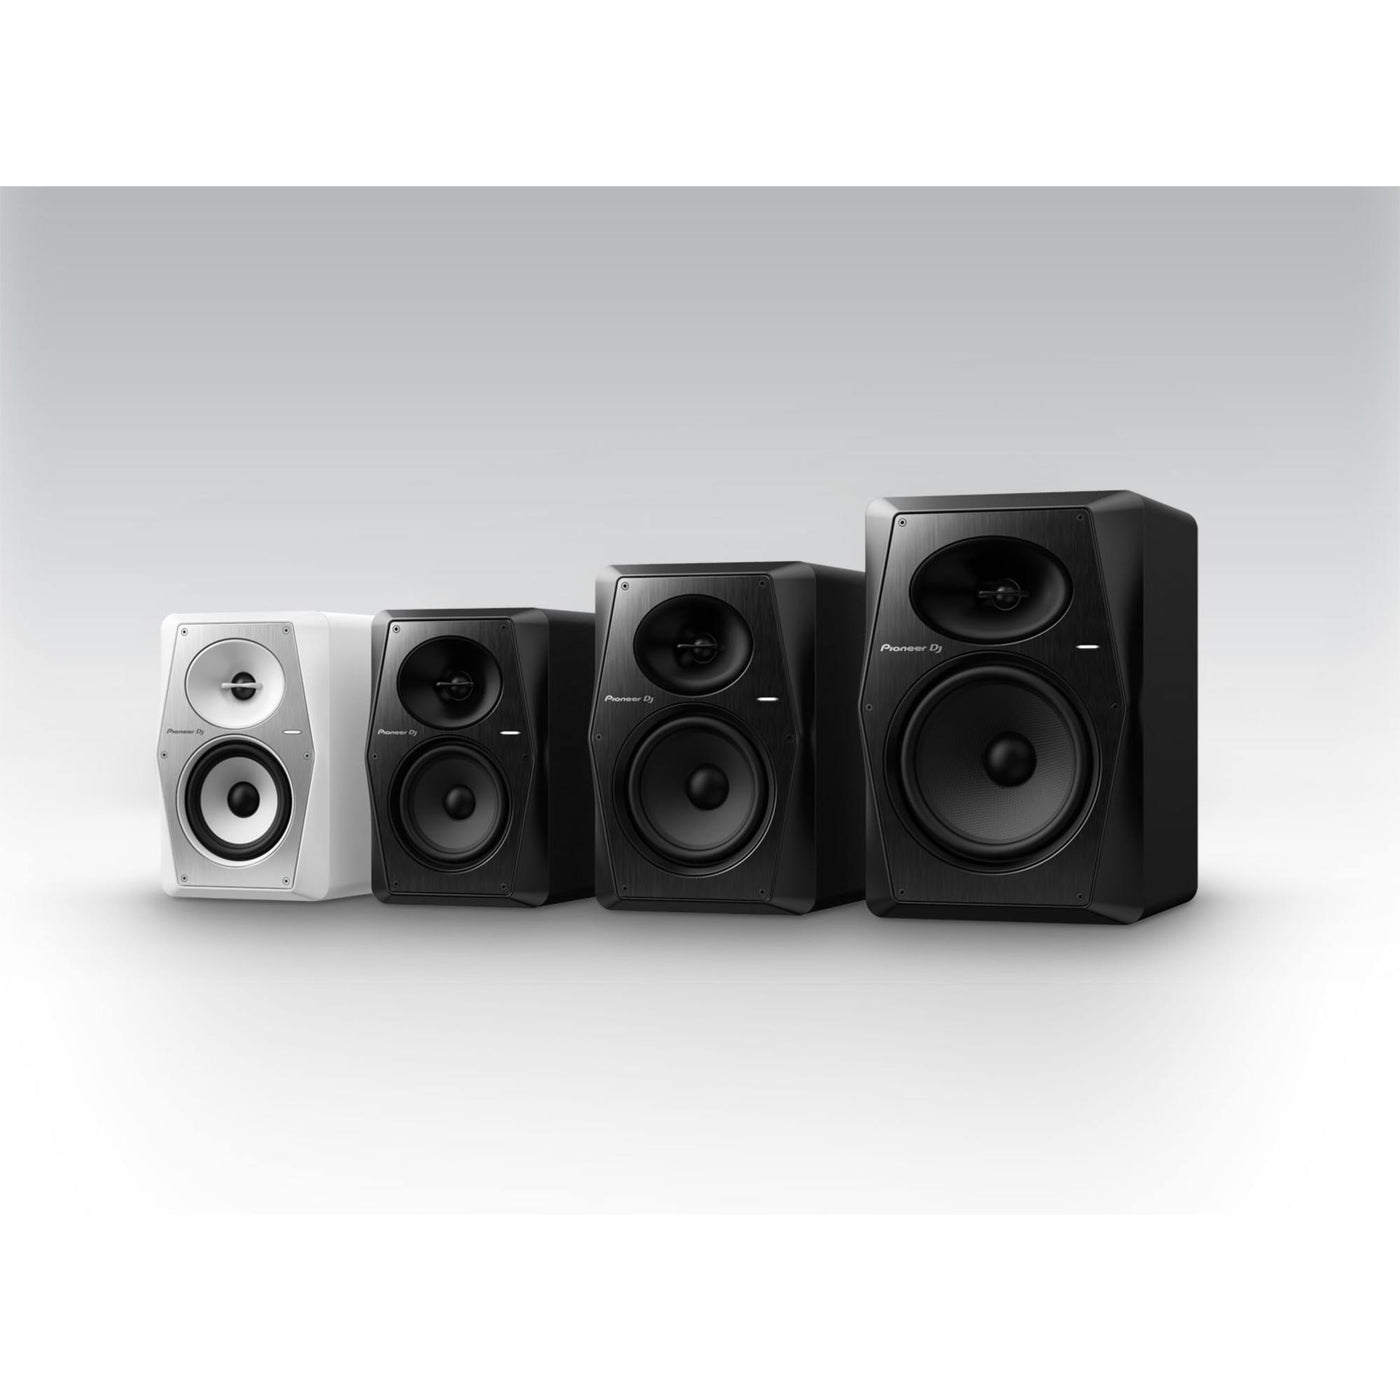 Pioneer DJ VM-50 5.25" Professional Active Monitor Speaker, Audio Equipment for Recording & DJ Sets, Black